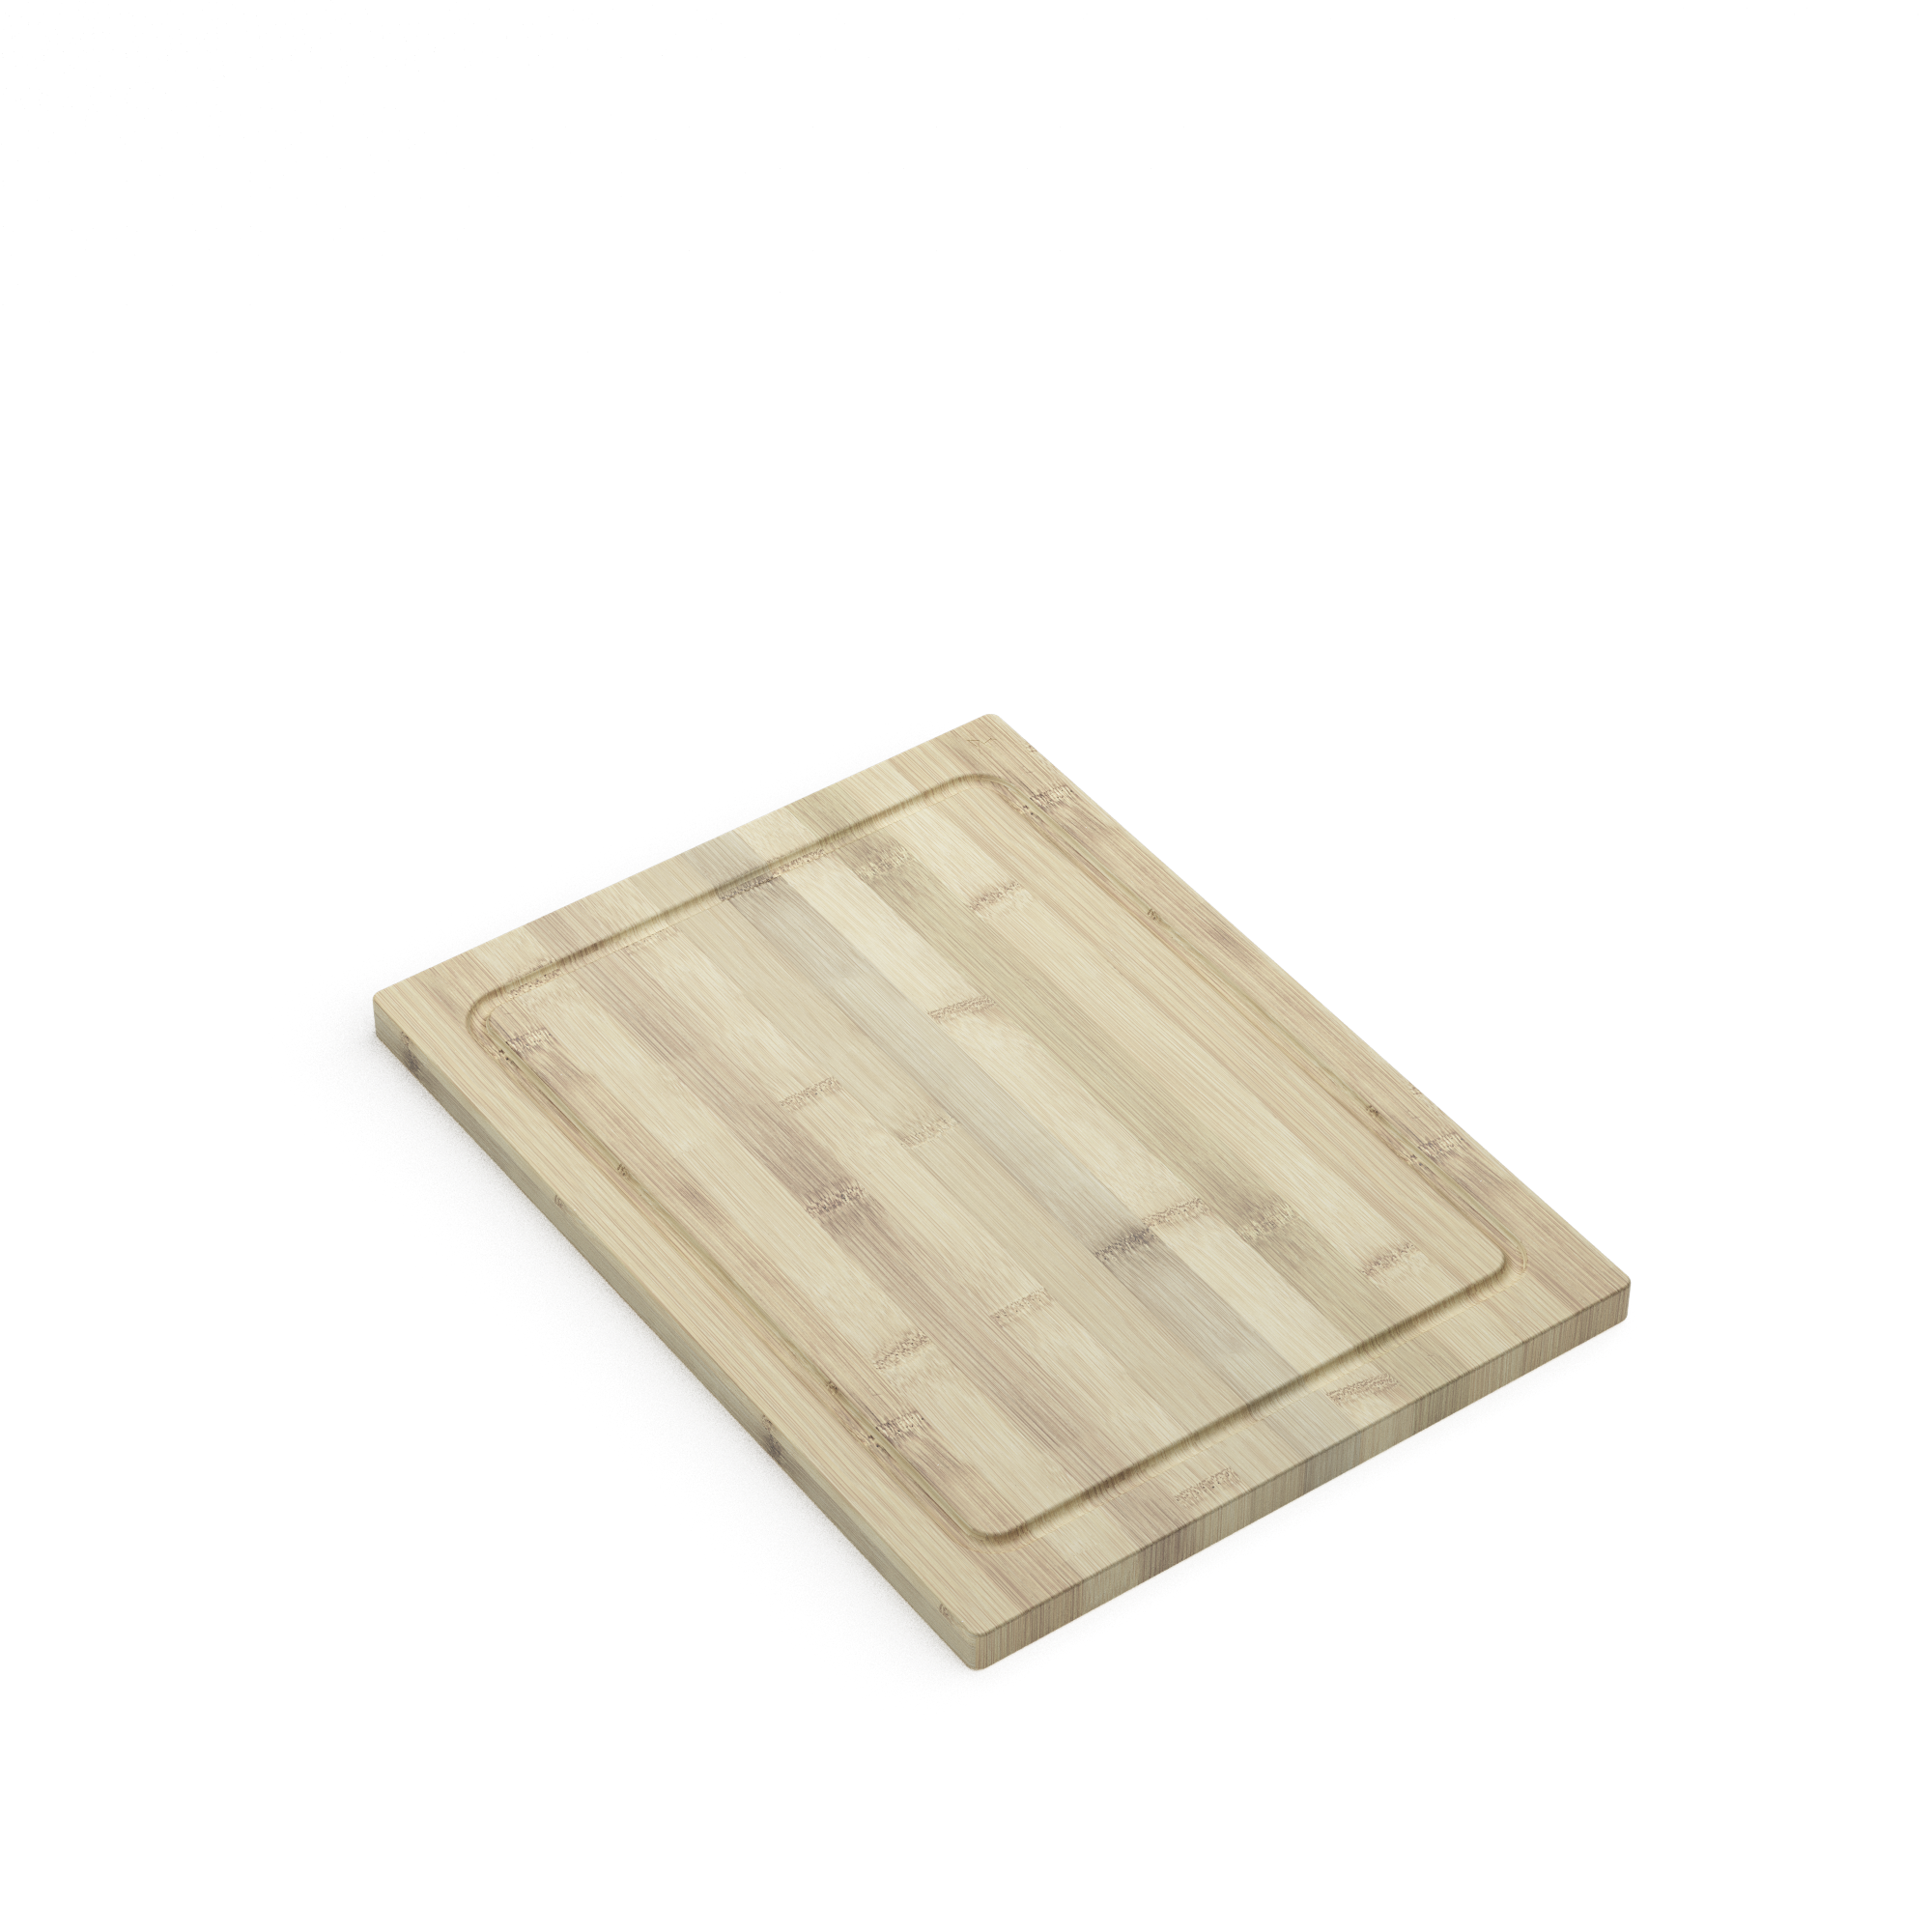 Artinox sink Chopping Board Large, Bamboo Wood - 3